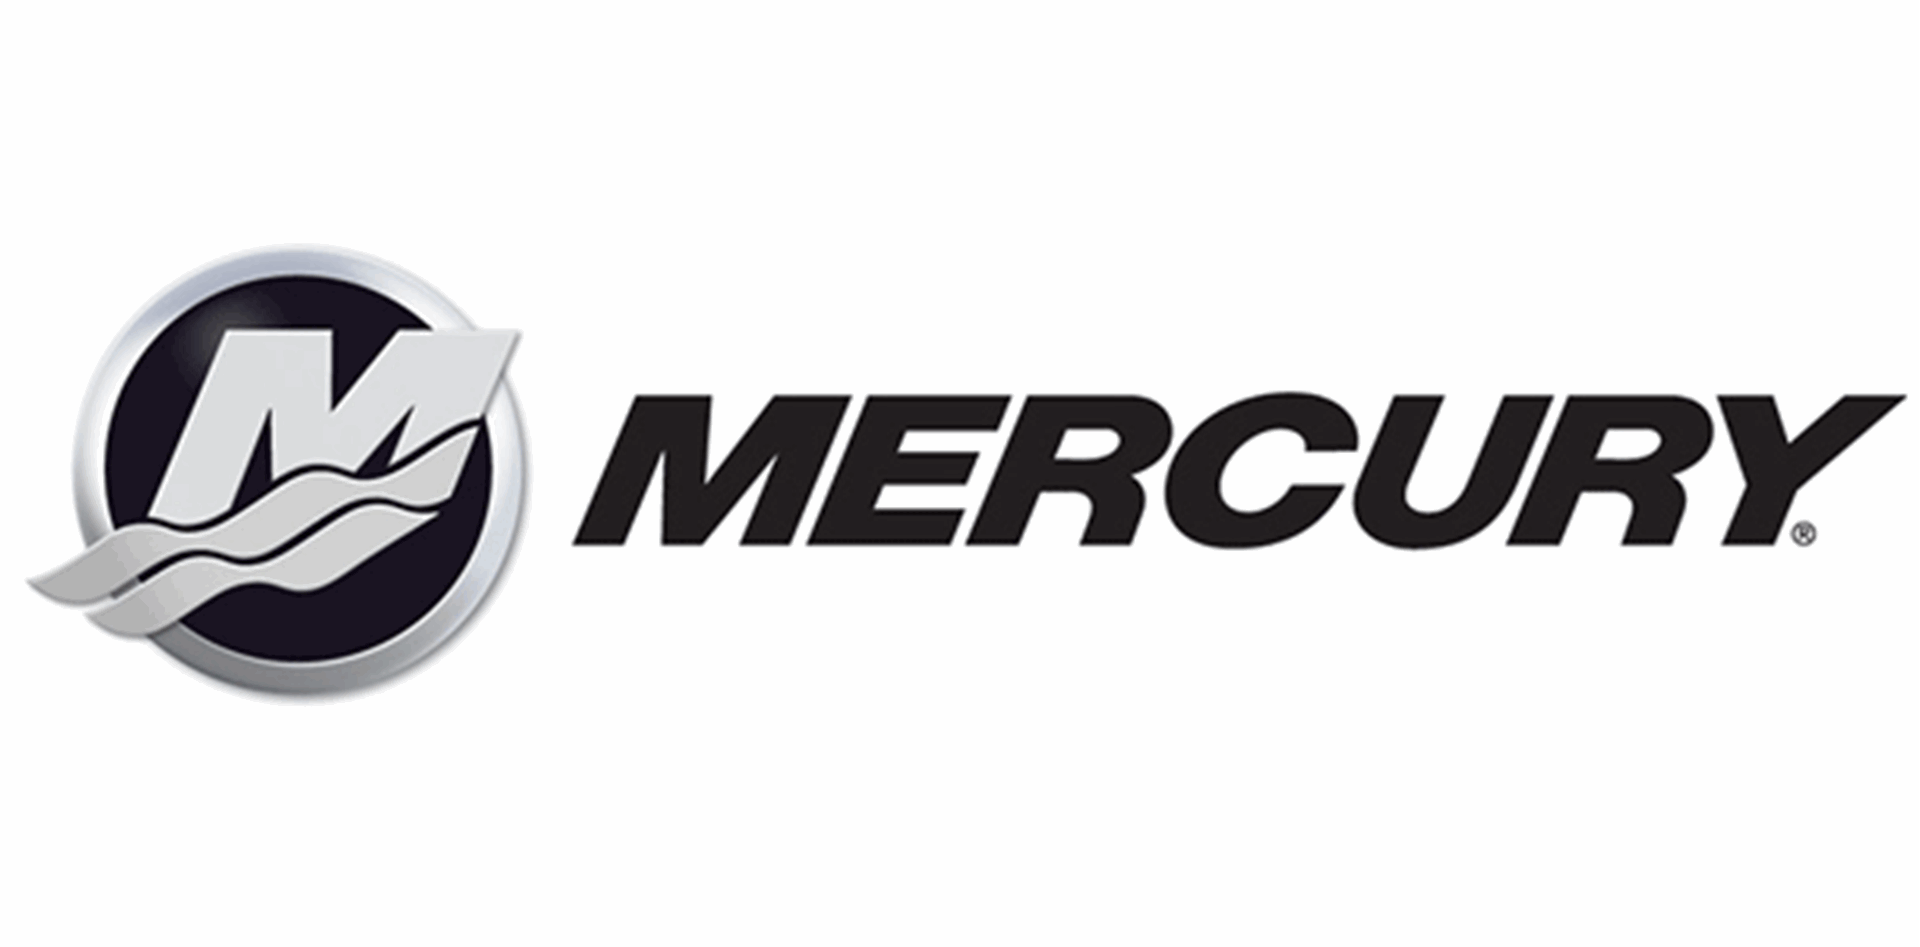 Logo Mercury